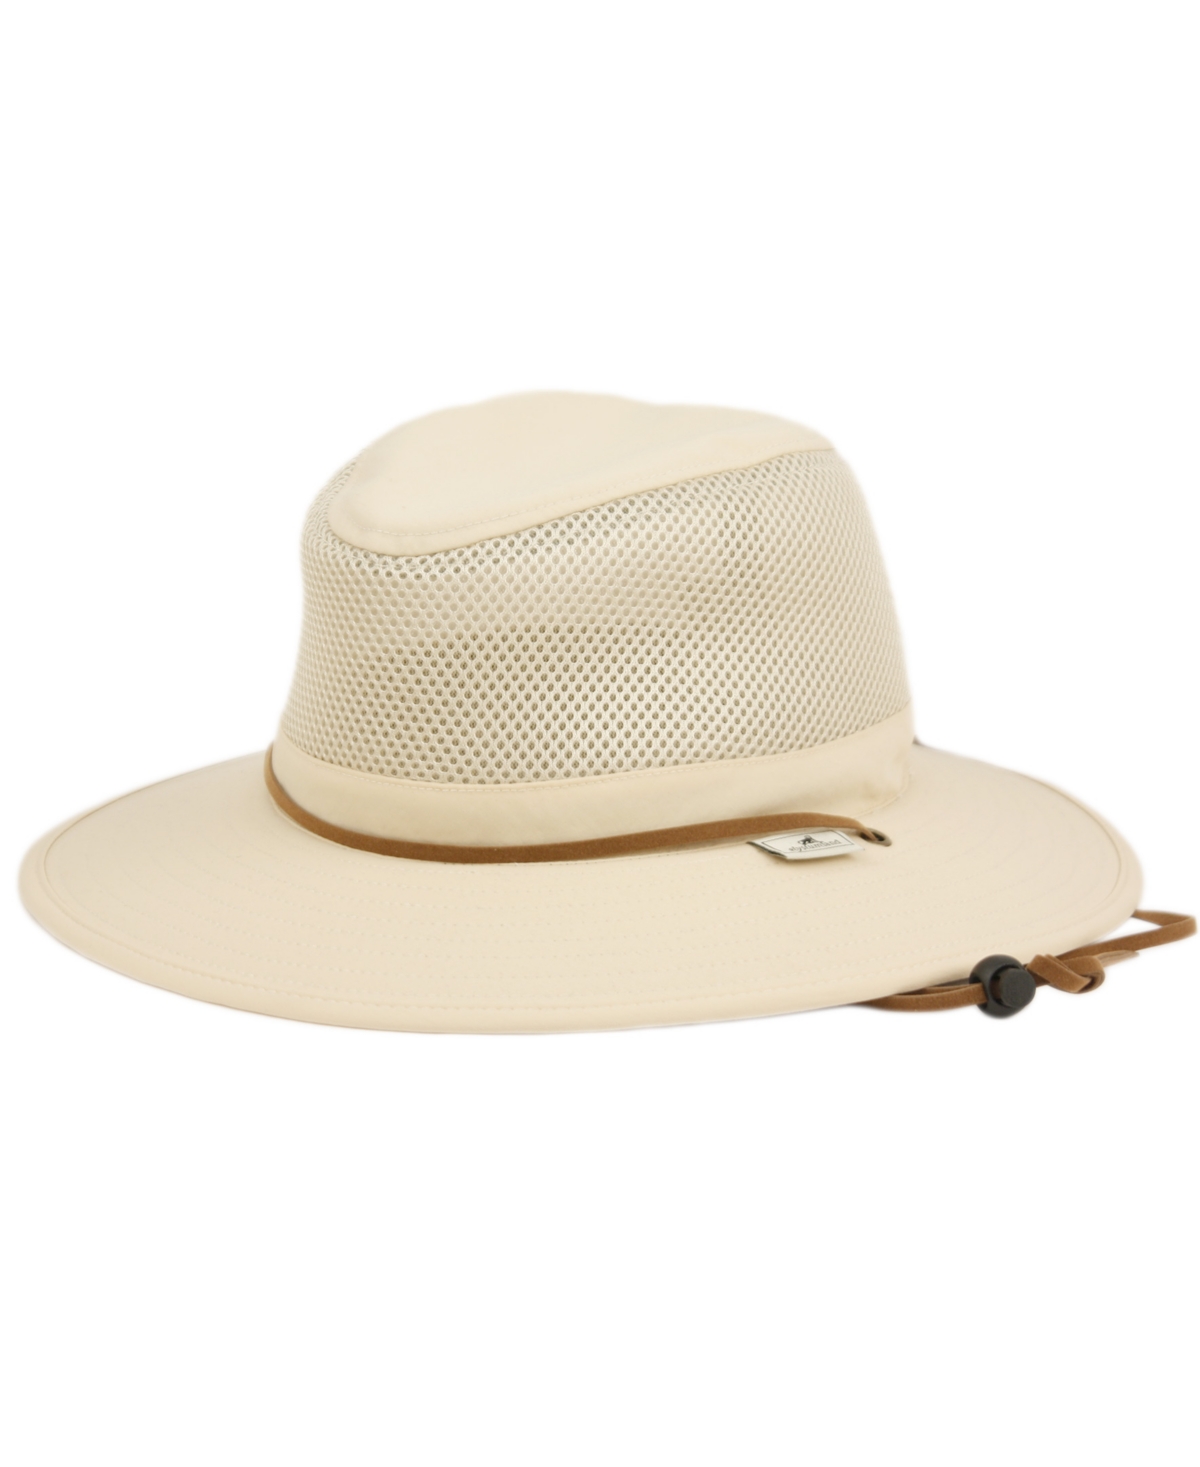 Outdoor Safari Mesh Sun Hat with Chin Cord - Khaki